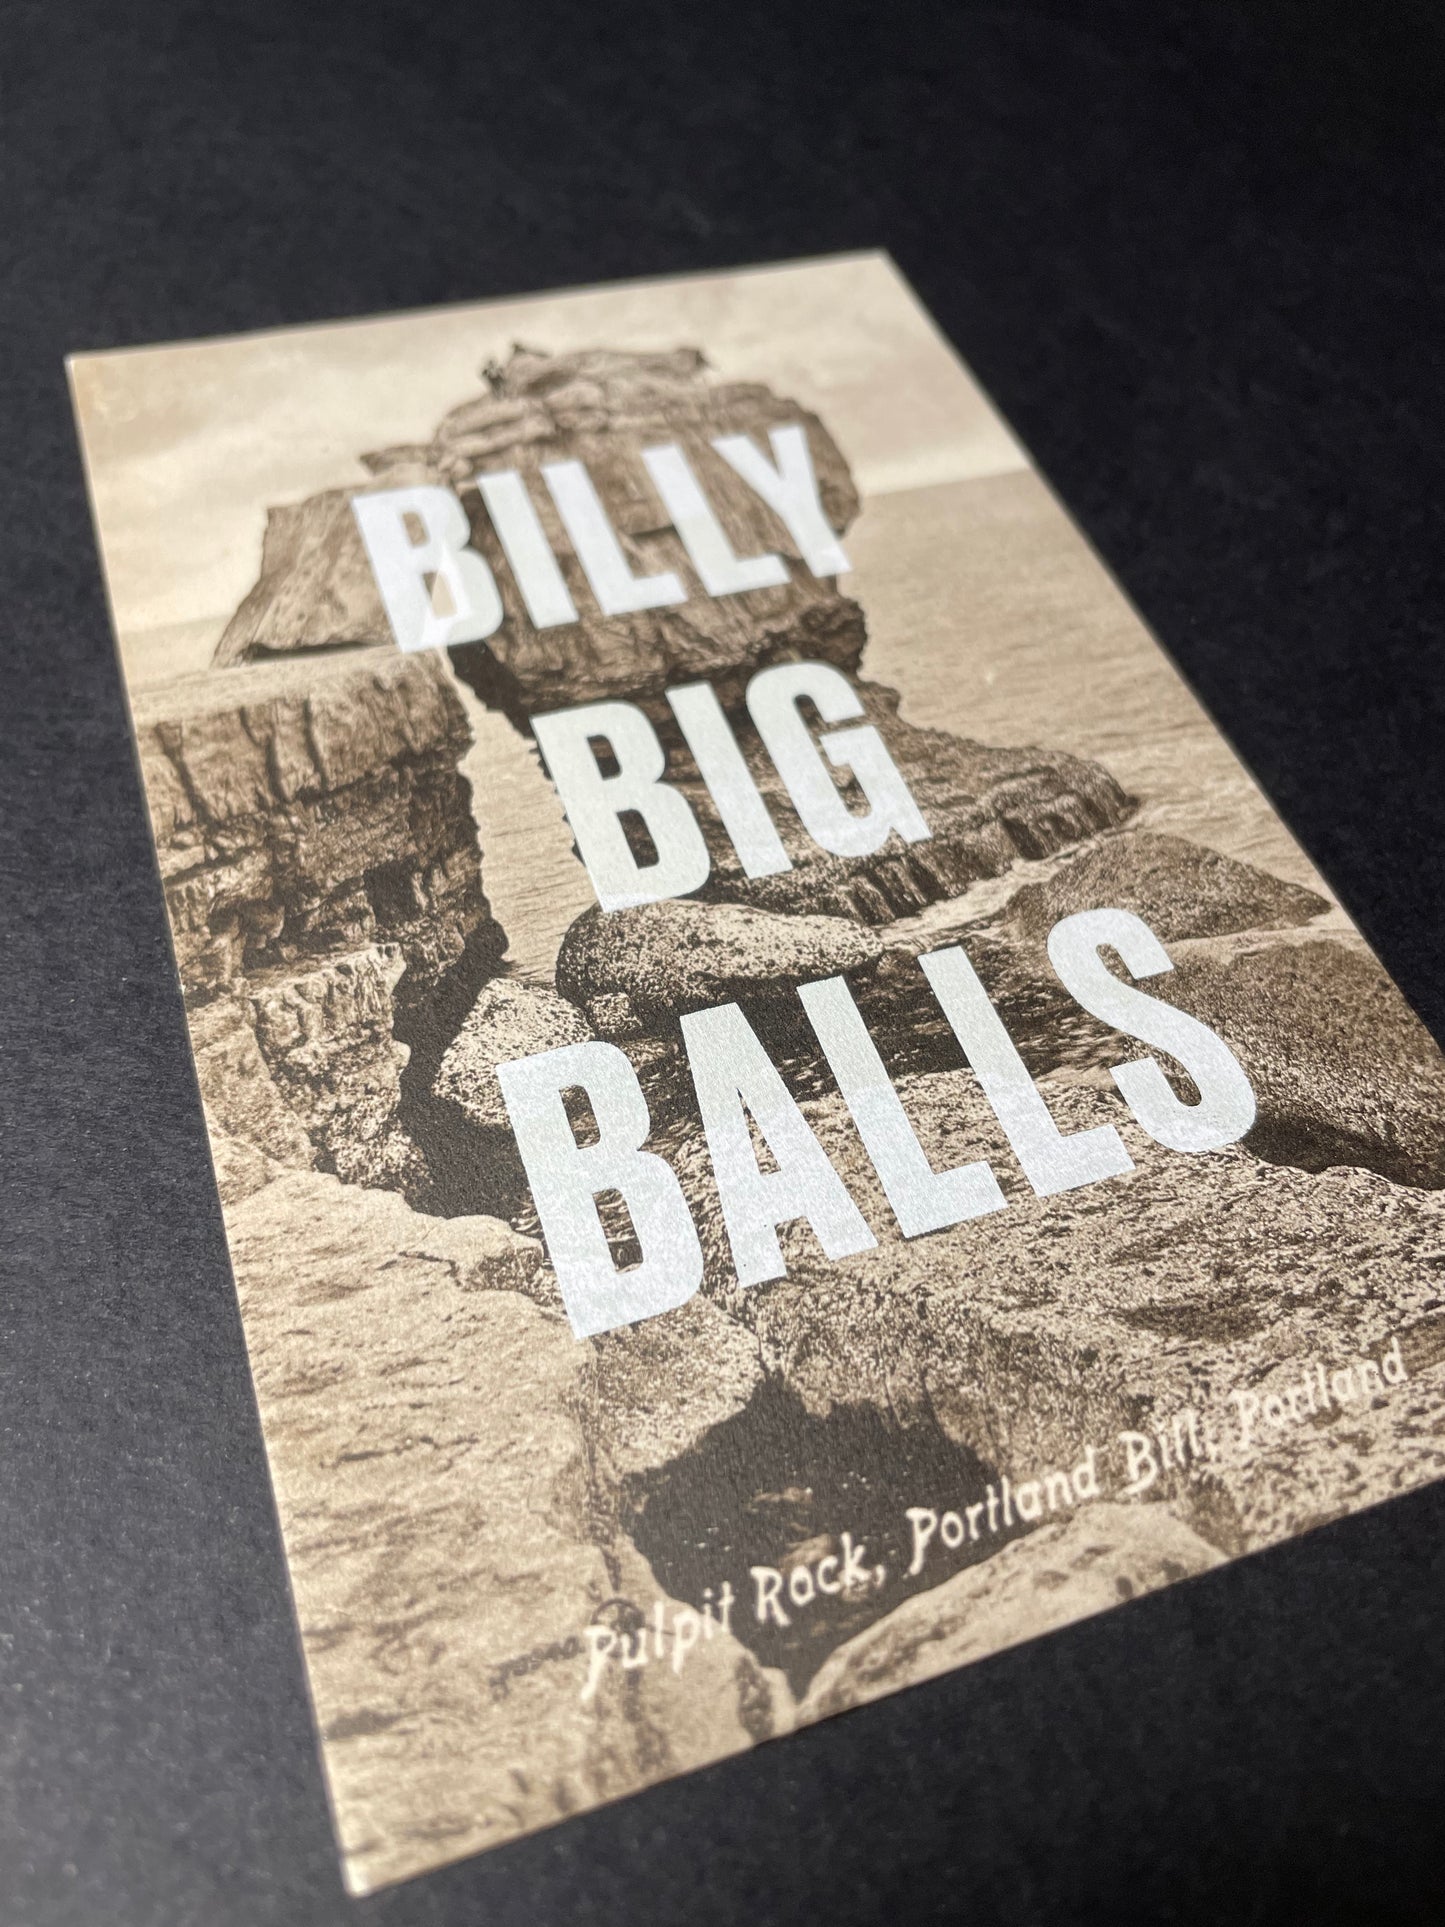 Billy Big Balls